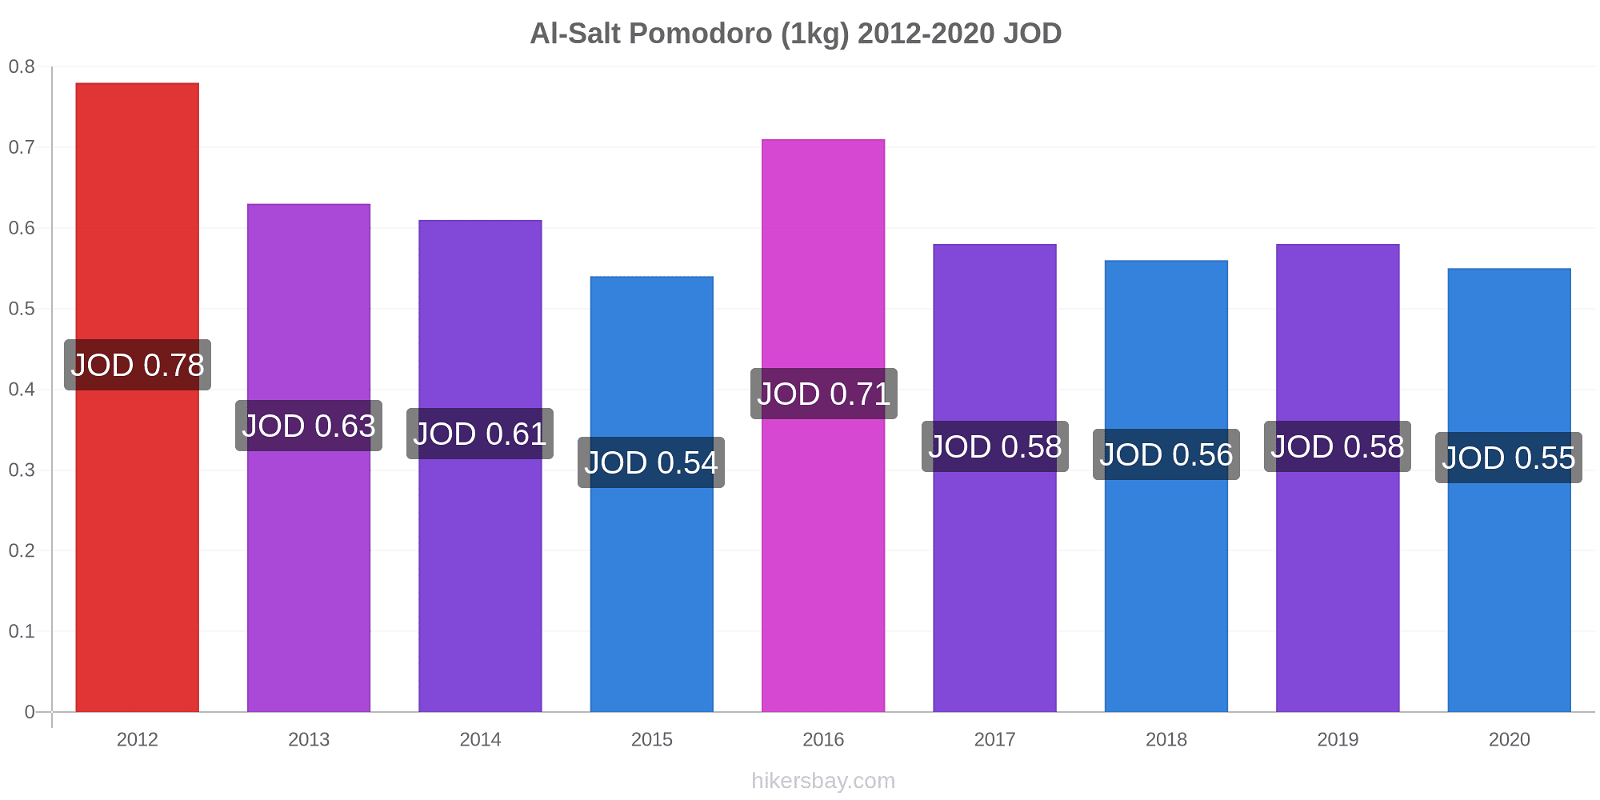 Al-Salt variazioni di prezzo Pomodoro (1kg) hikersbay.com